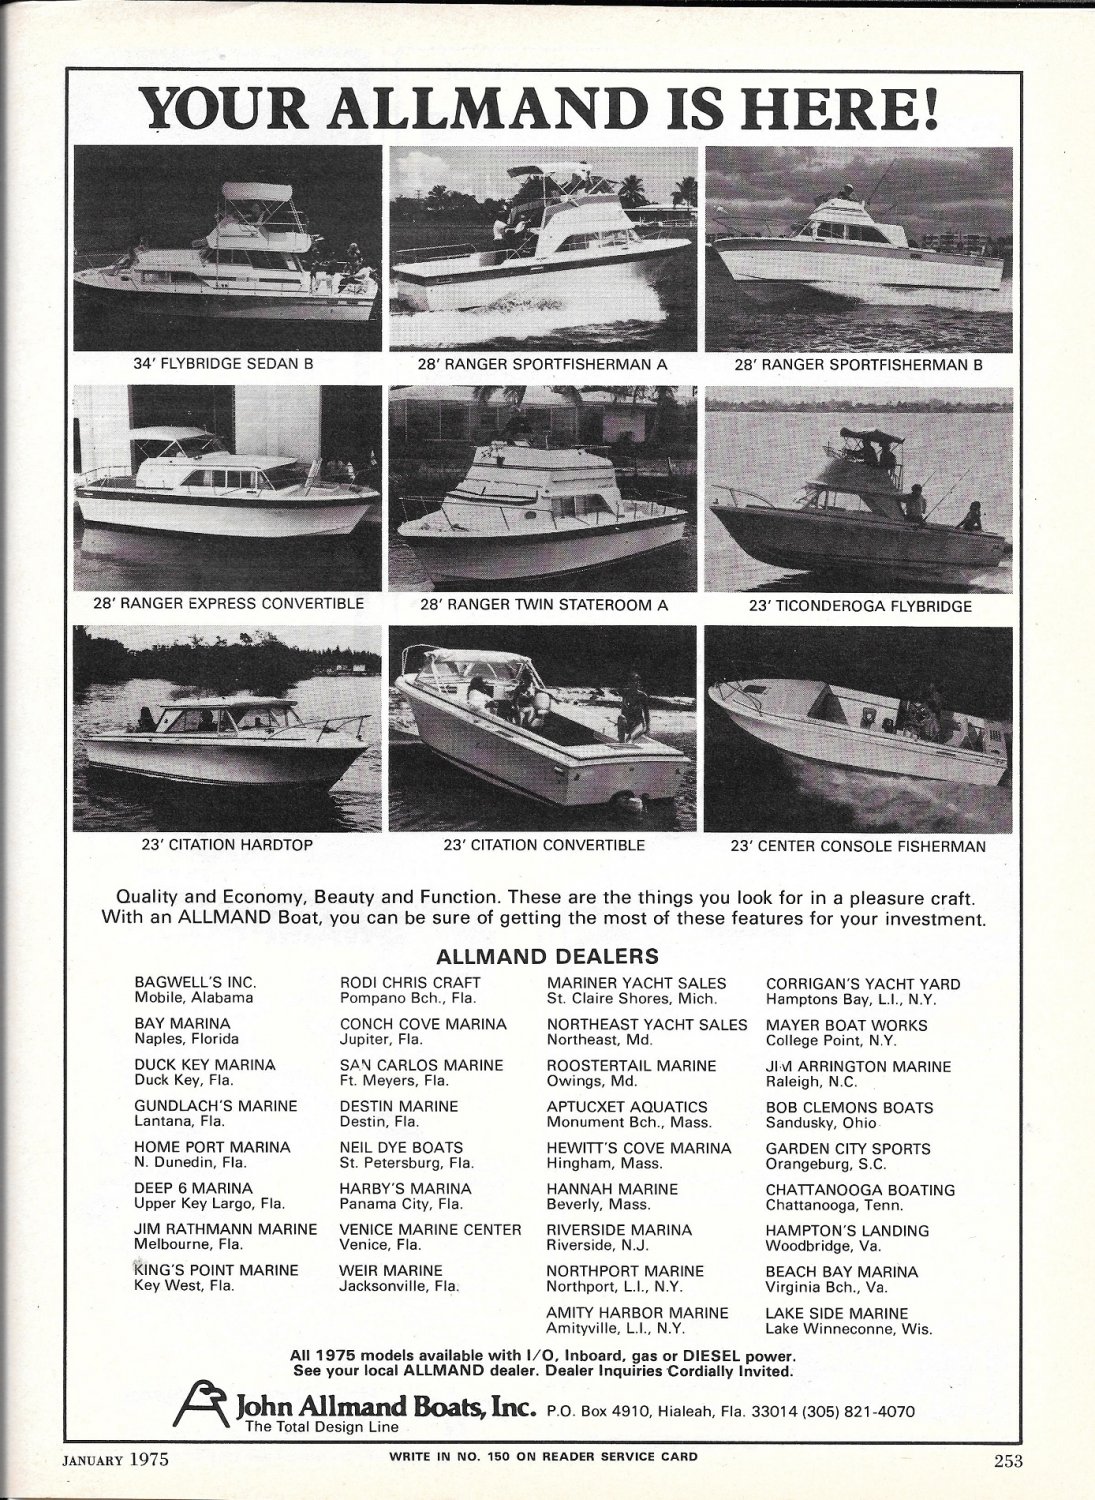 1975 John Allmand Boats Inc Ad- Photo of 9 Models